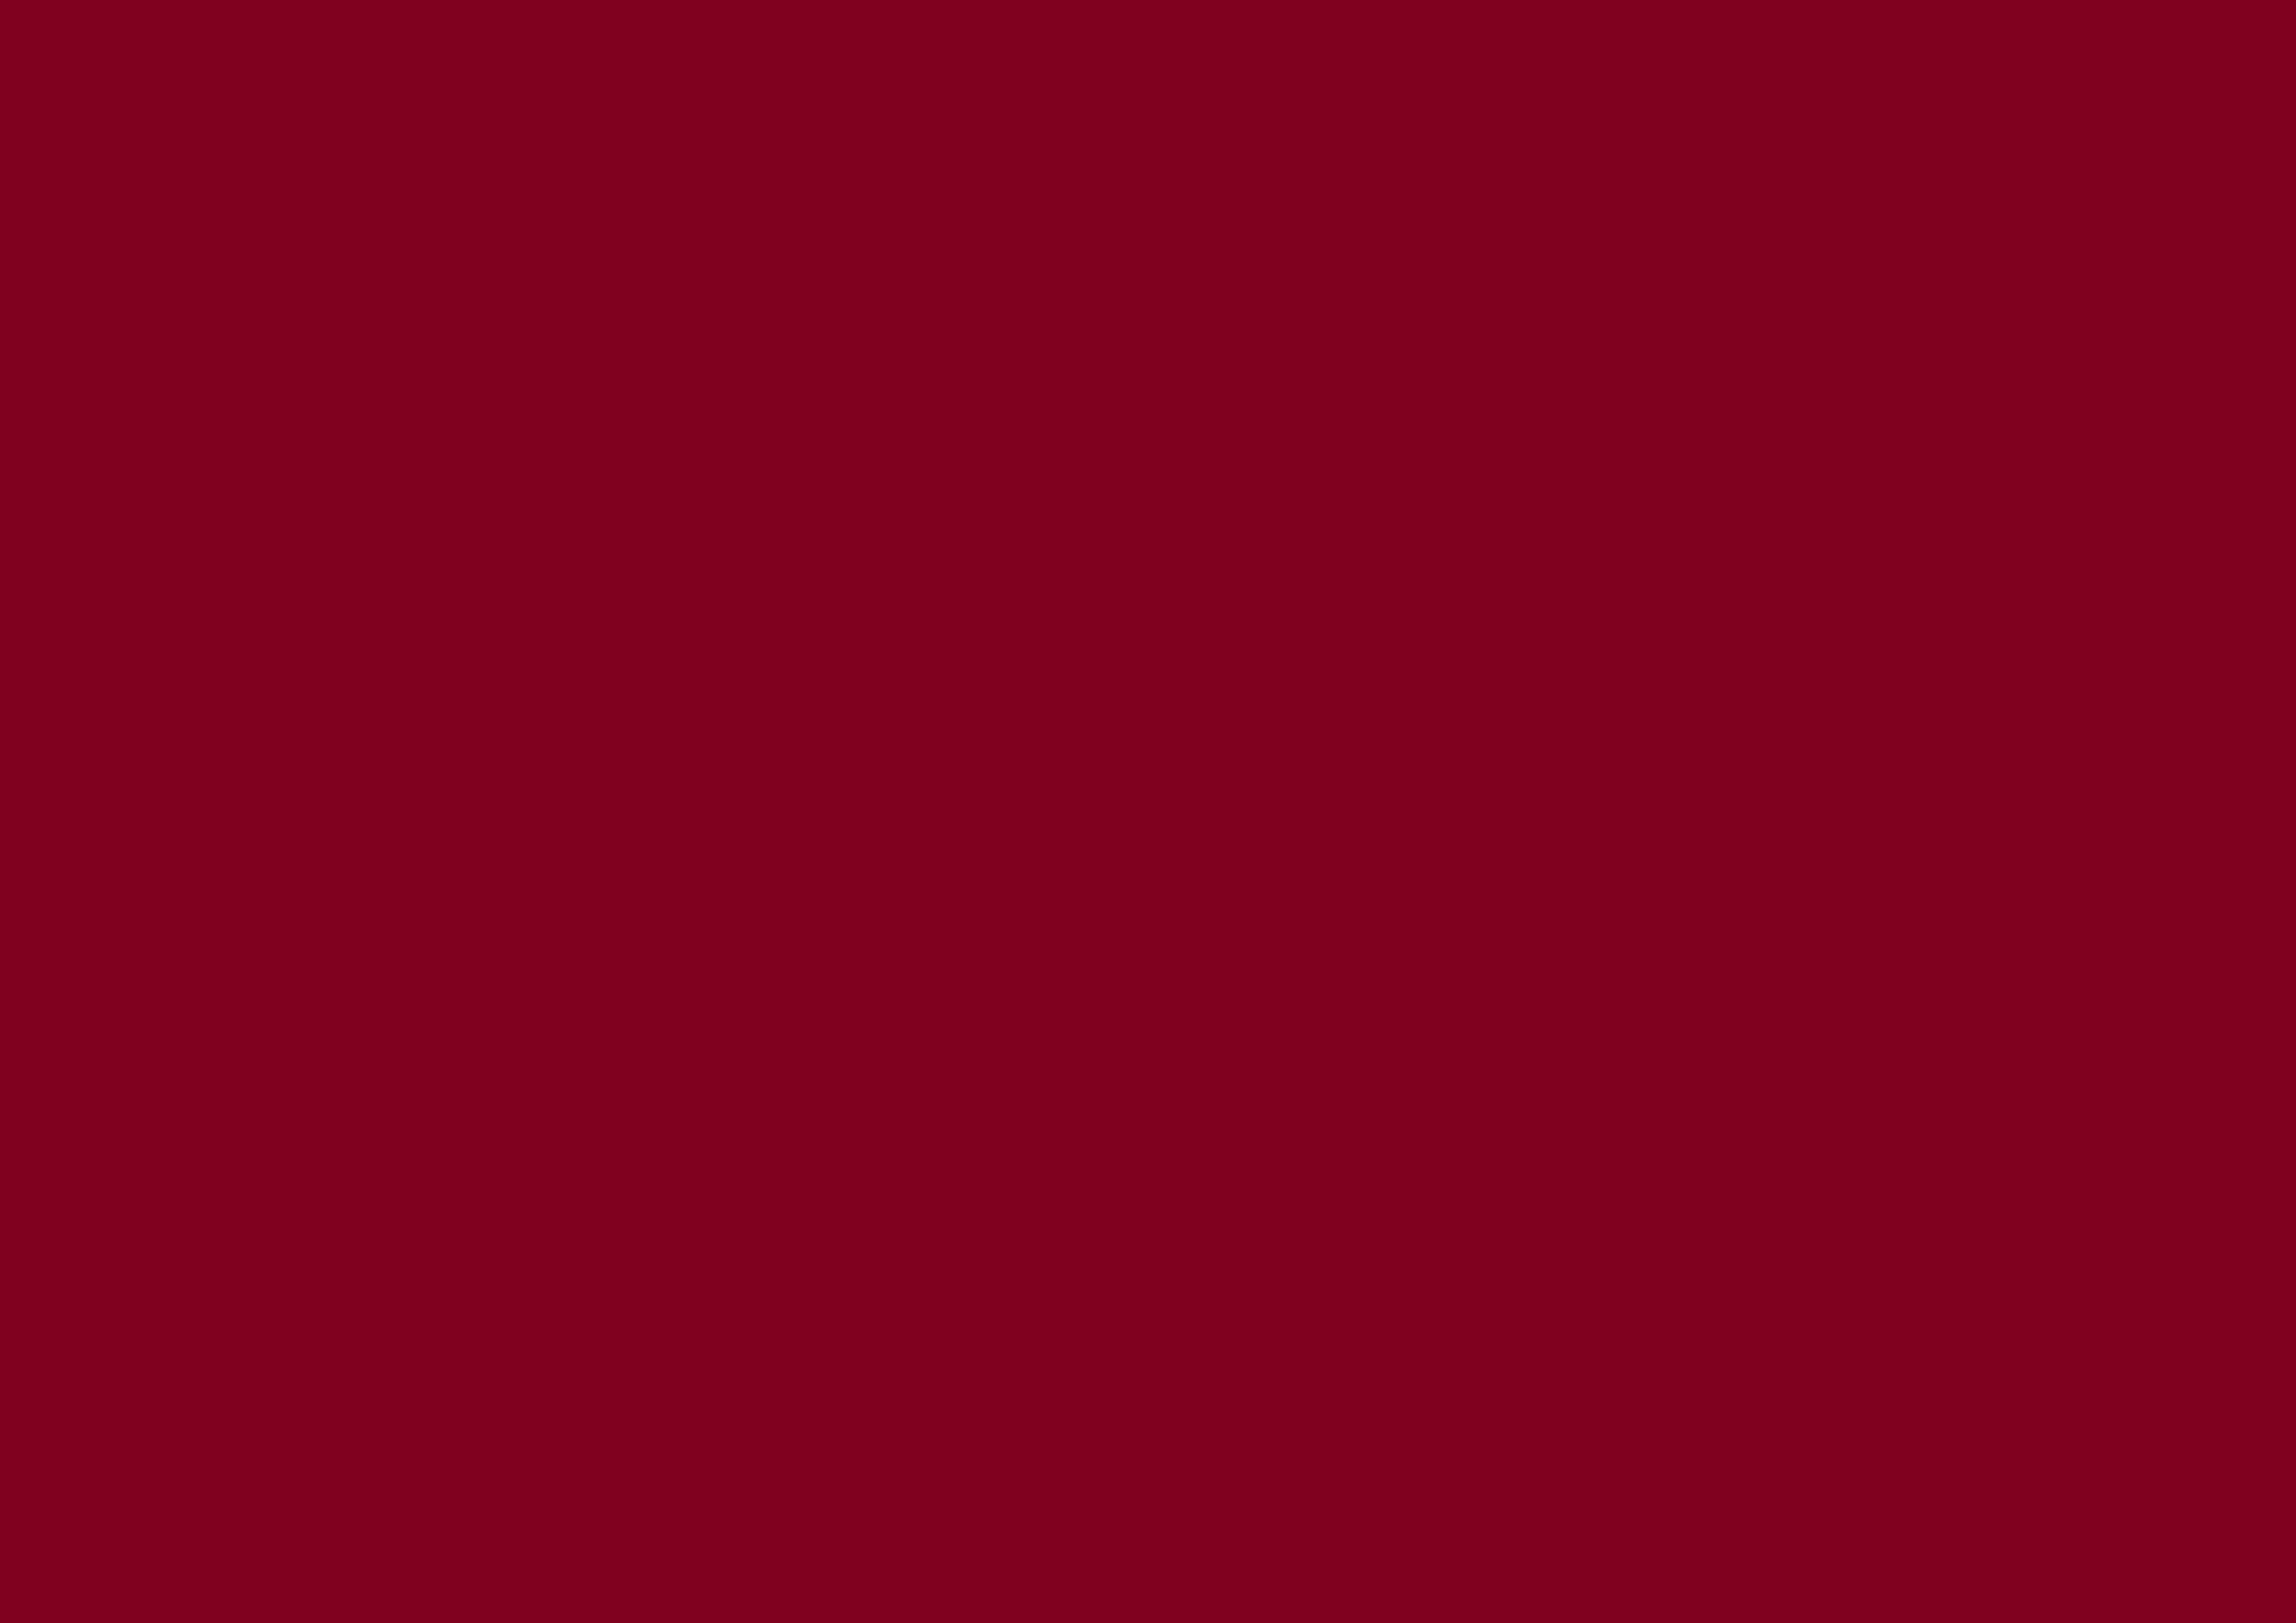 3508x2480 Burgundy Solid Color Background